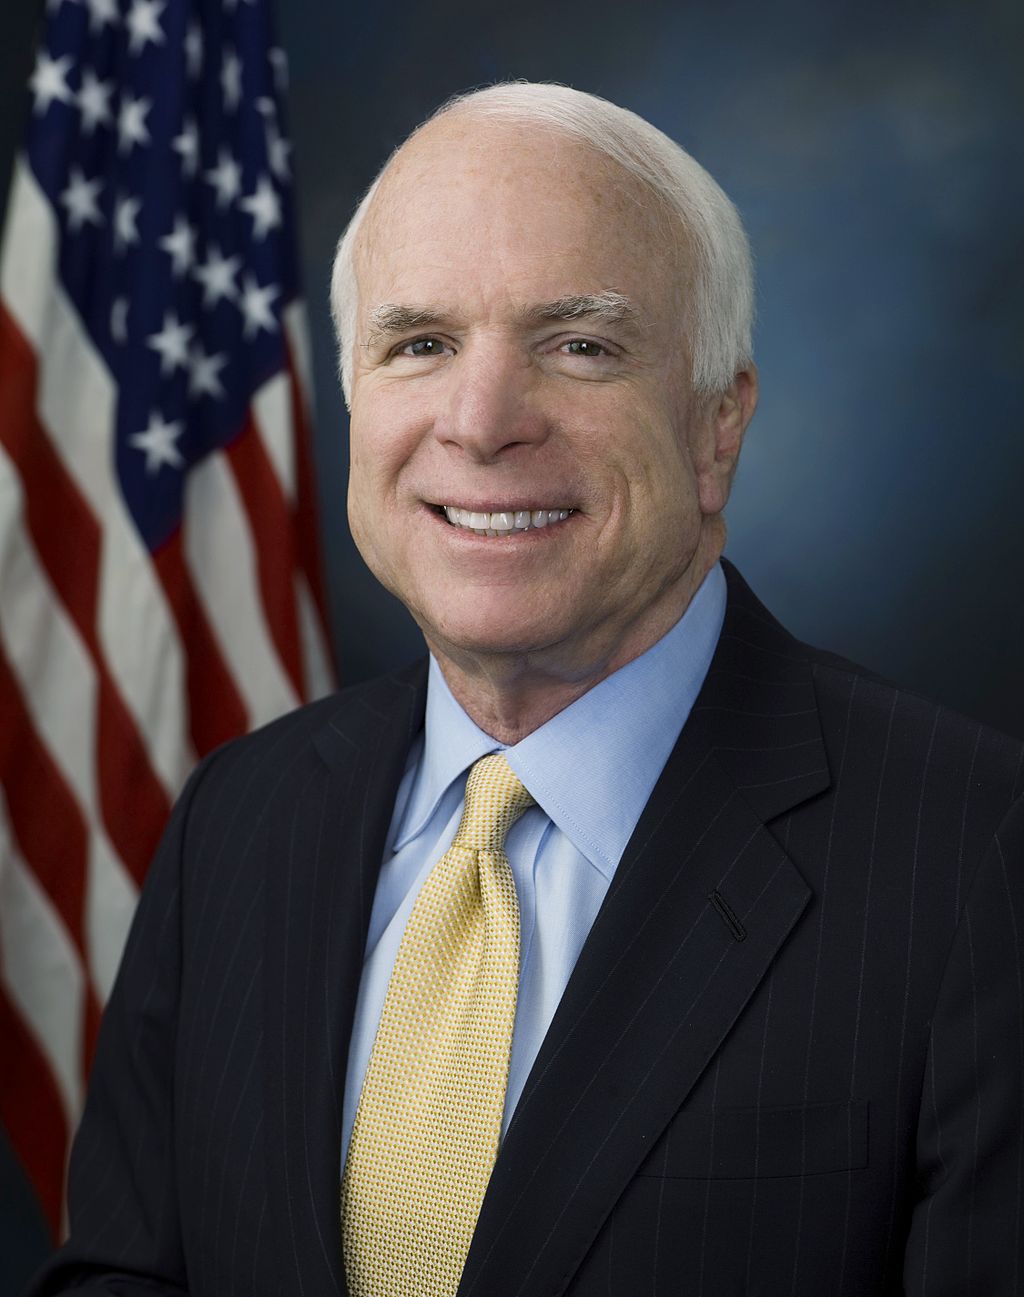 Atlantik-Brücke trauert um Senator John McCain